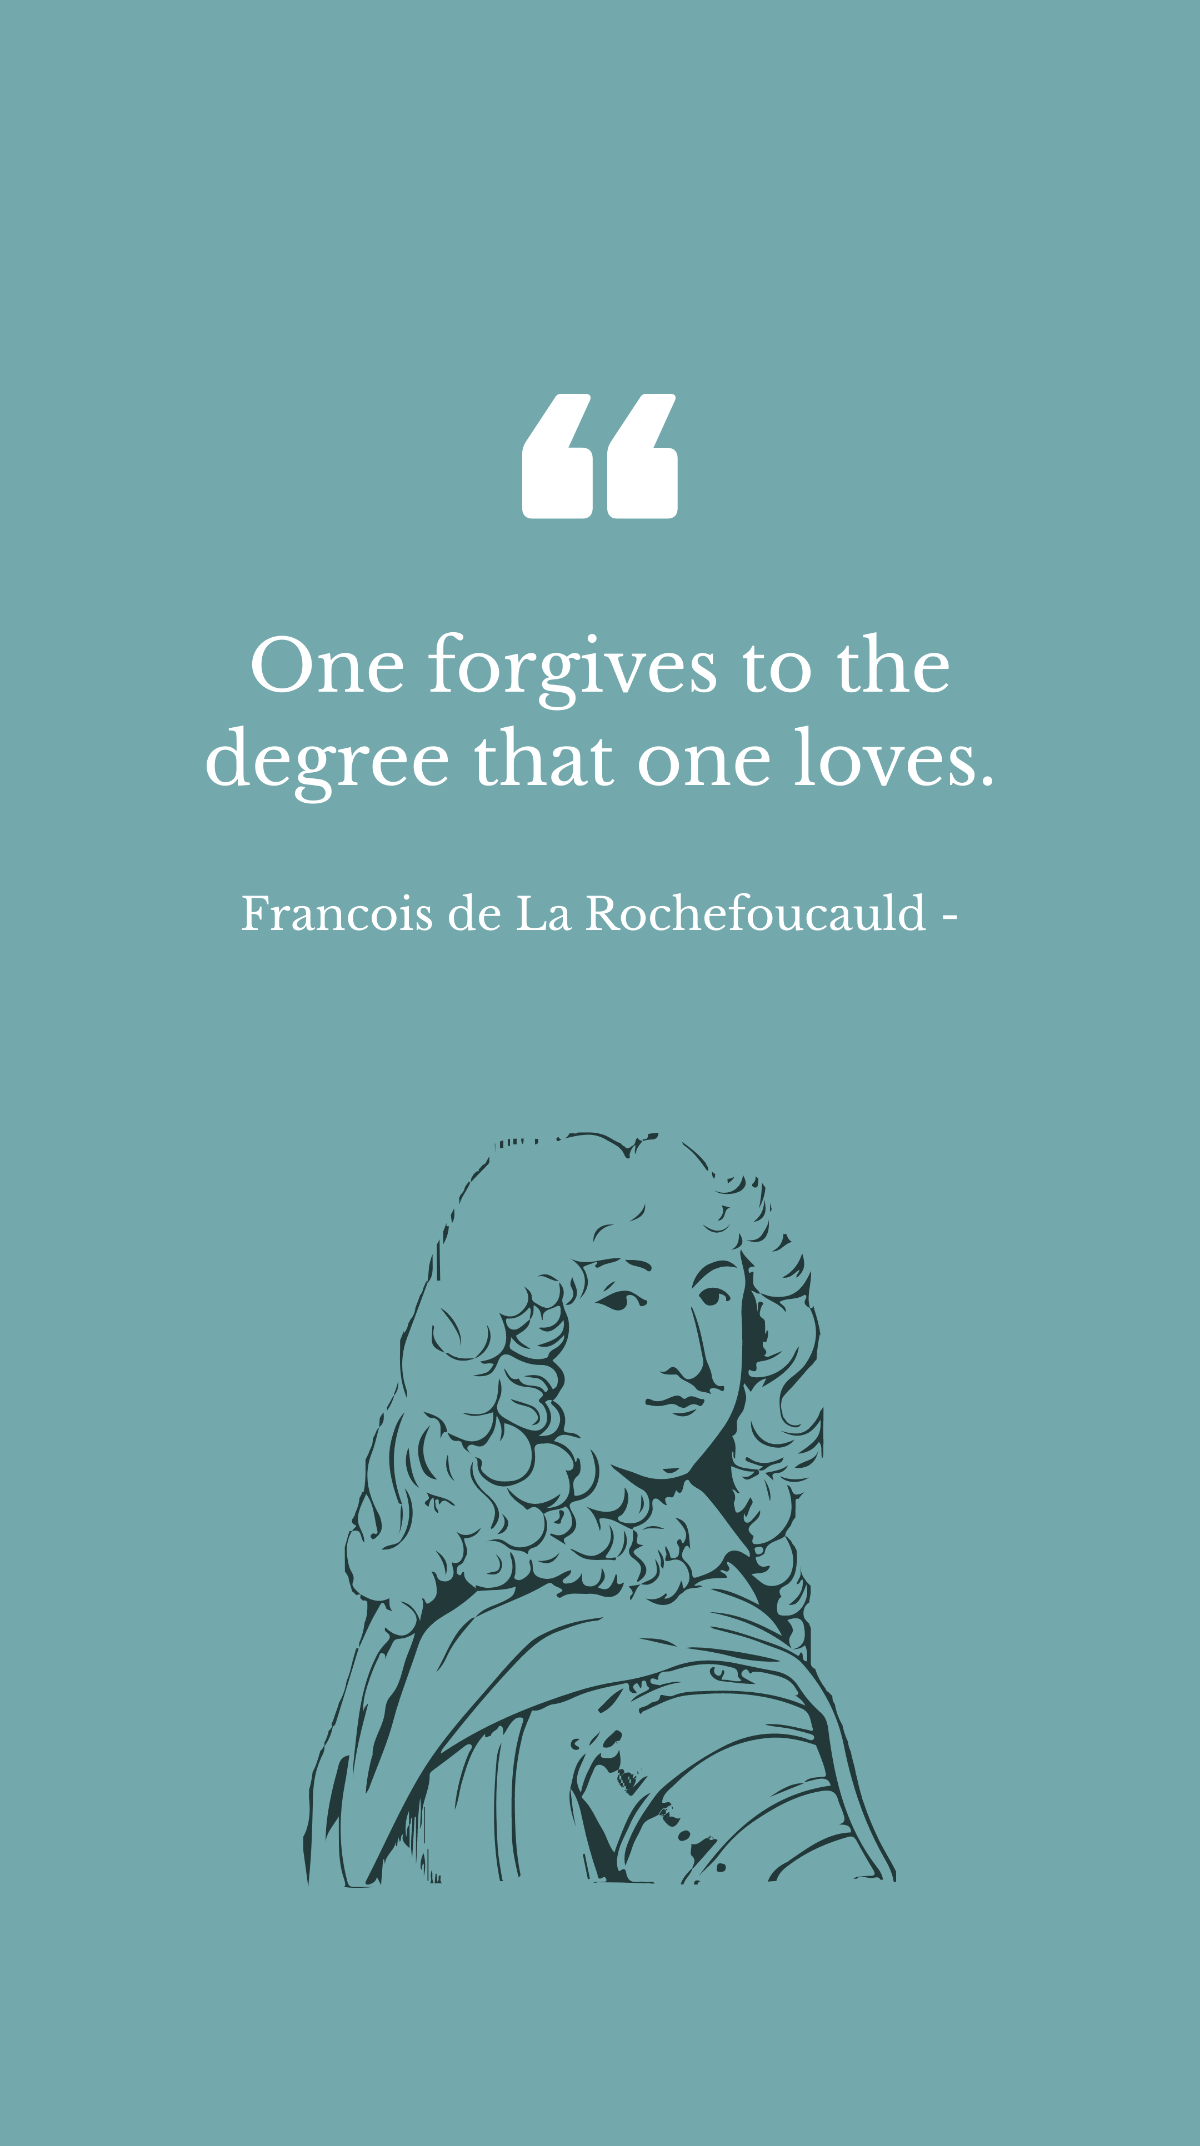 Francois de La Rochefoucauld - One forgives to the degree that one loves. Template